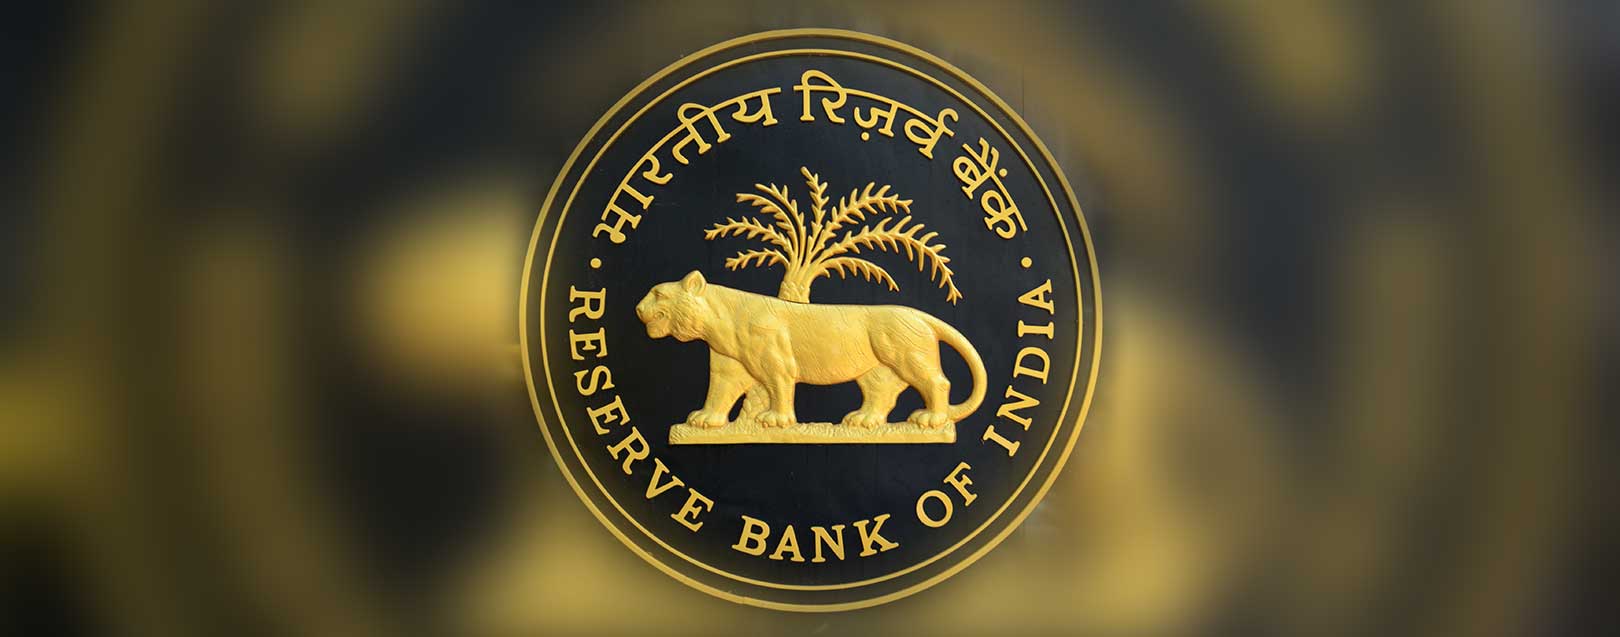 RBI launches new debt restructuring scheme